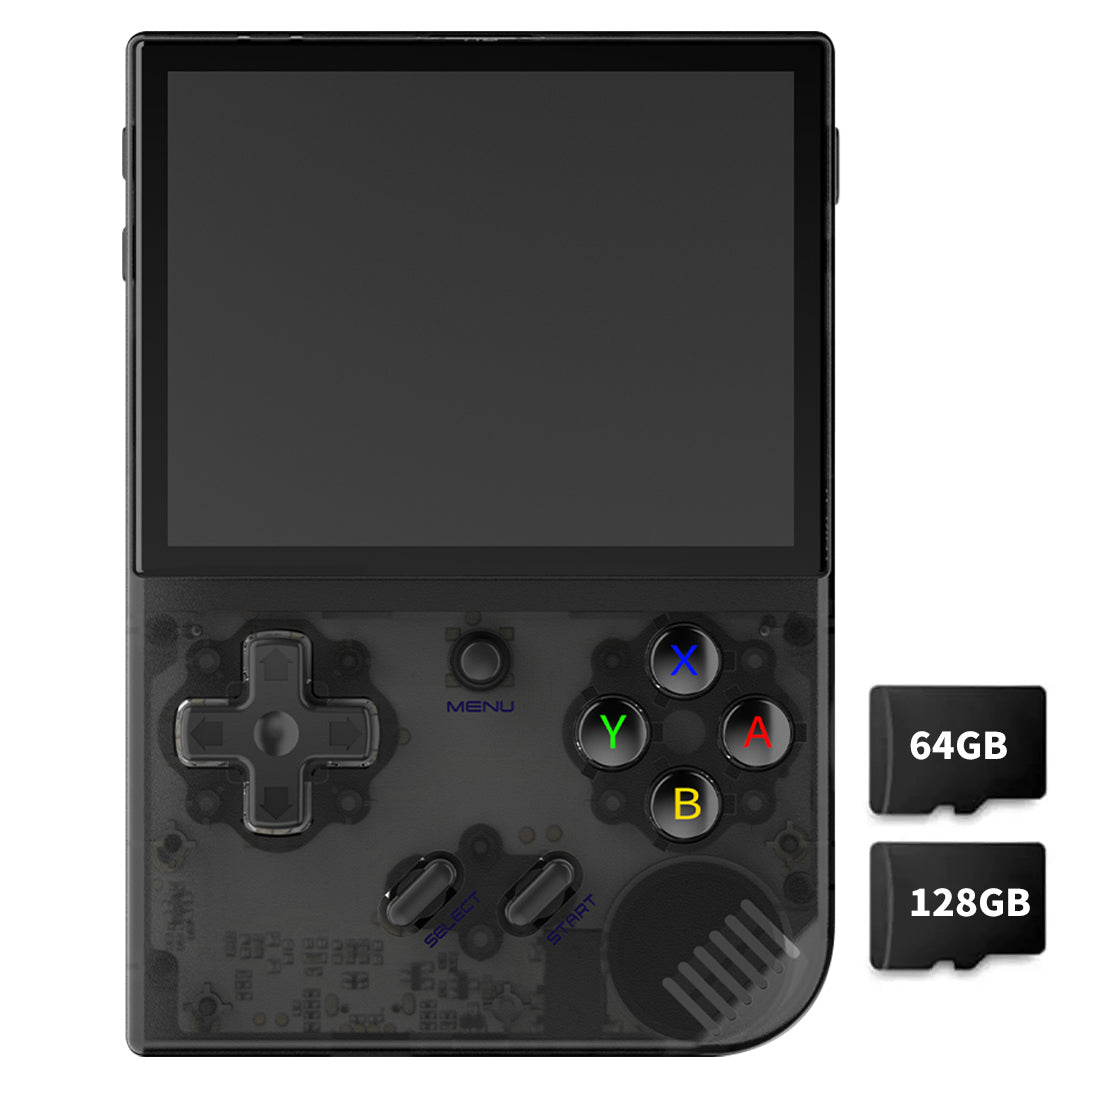 Anbernic RG35XX H Retro Portable Handheld Game Console-LITNXT – litnxt